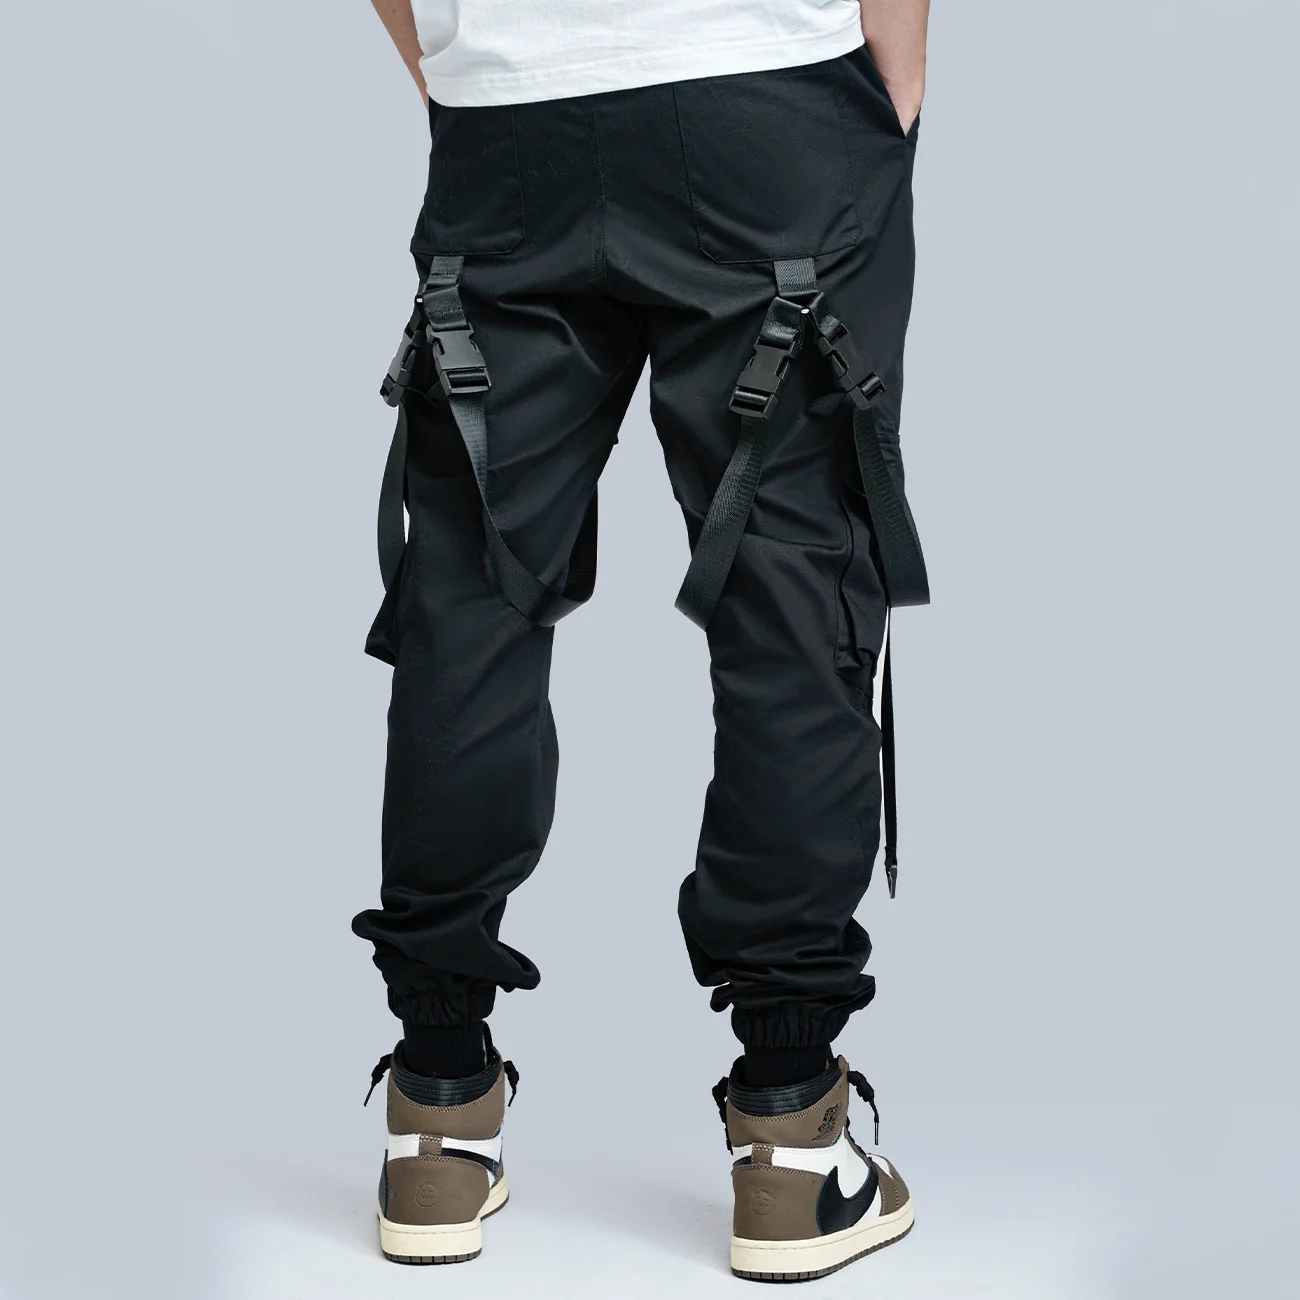 Buckle Black Ribbons Cargo Pants Techwear Men Tactical Function Joggers Hip Hop Casual Trousers Pants Streetwear